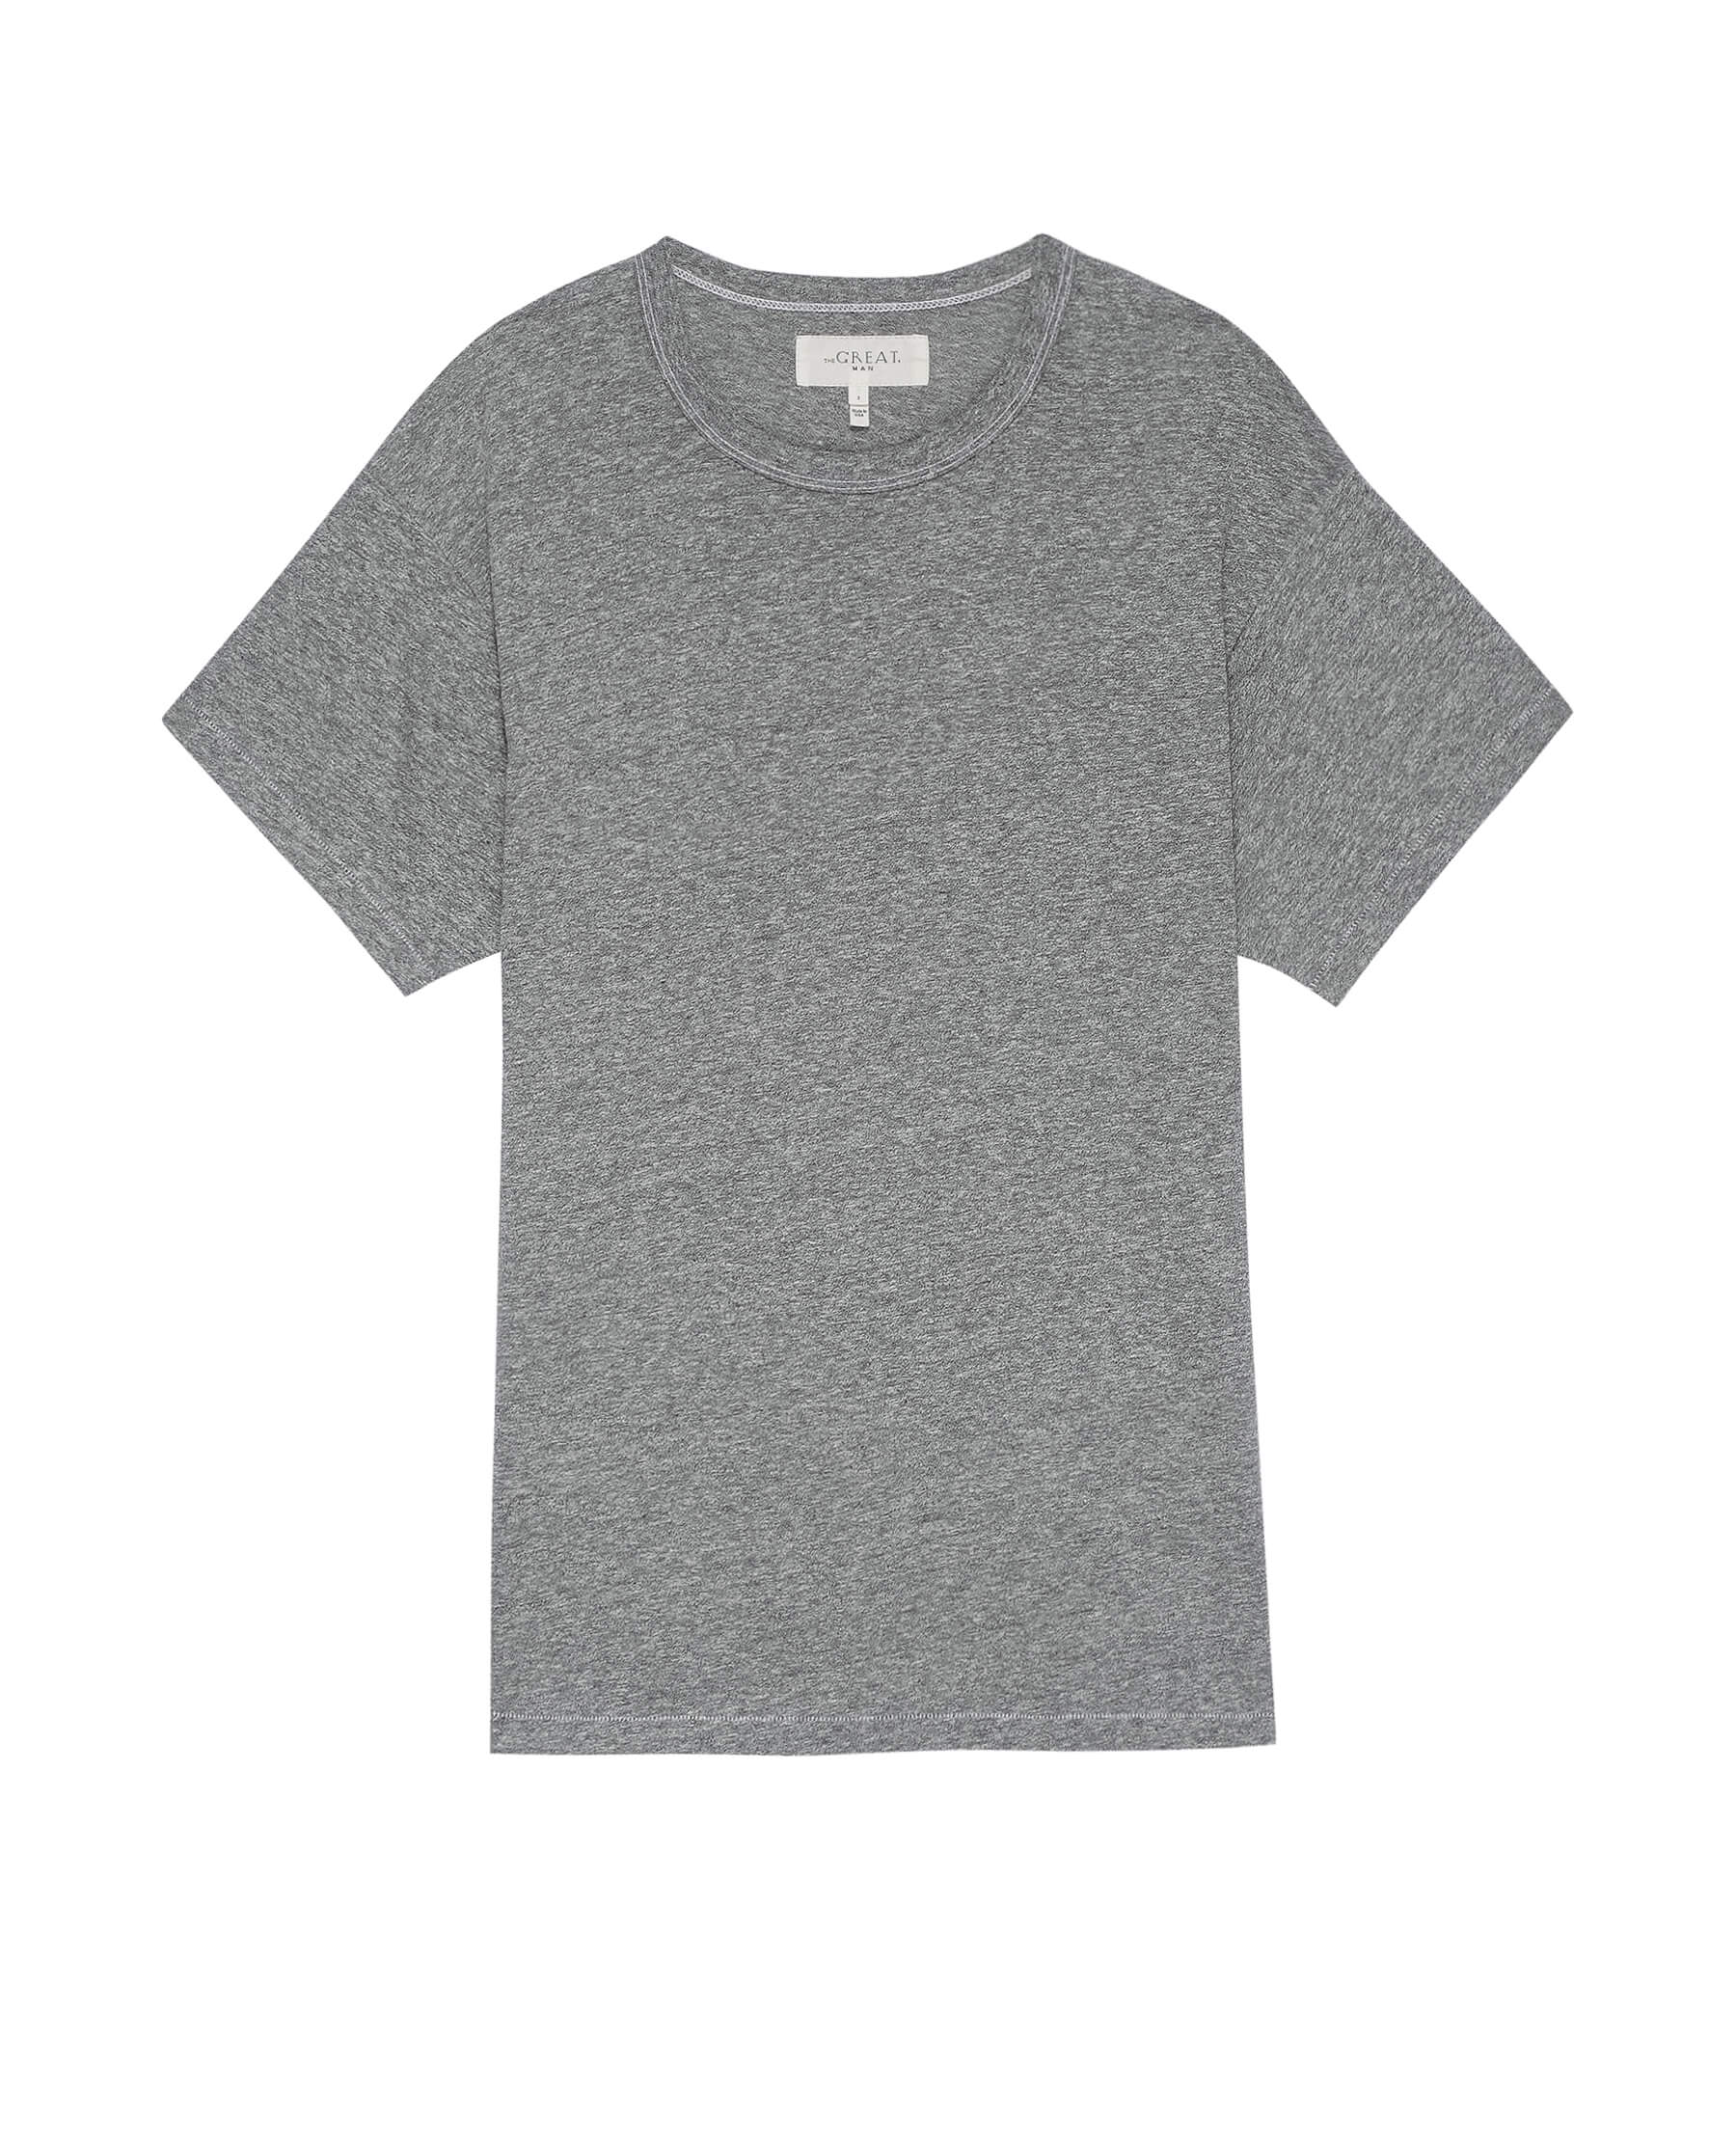  Grey - Men's T-Shirts / Men's Tops, Tees & Shirts